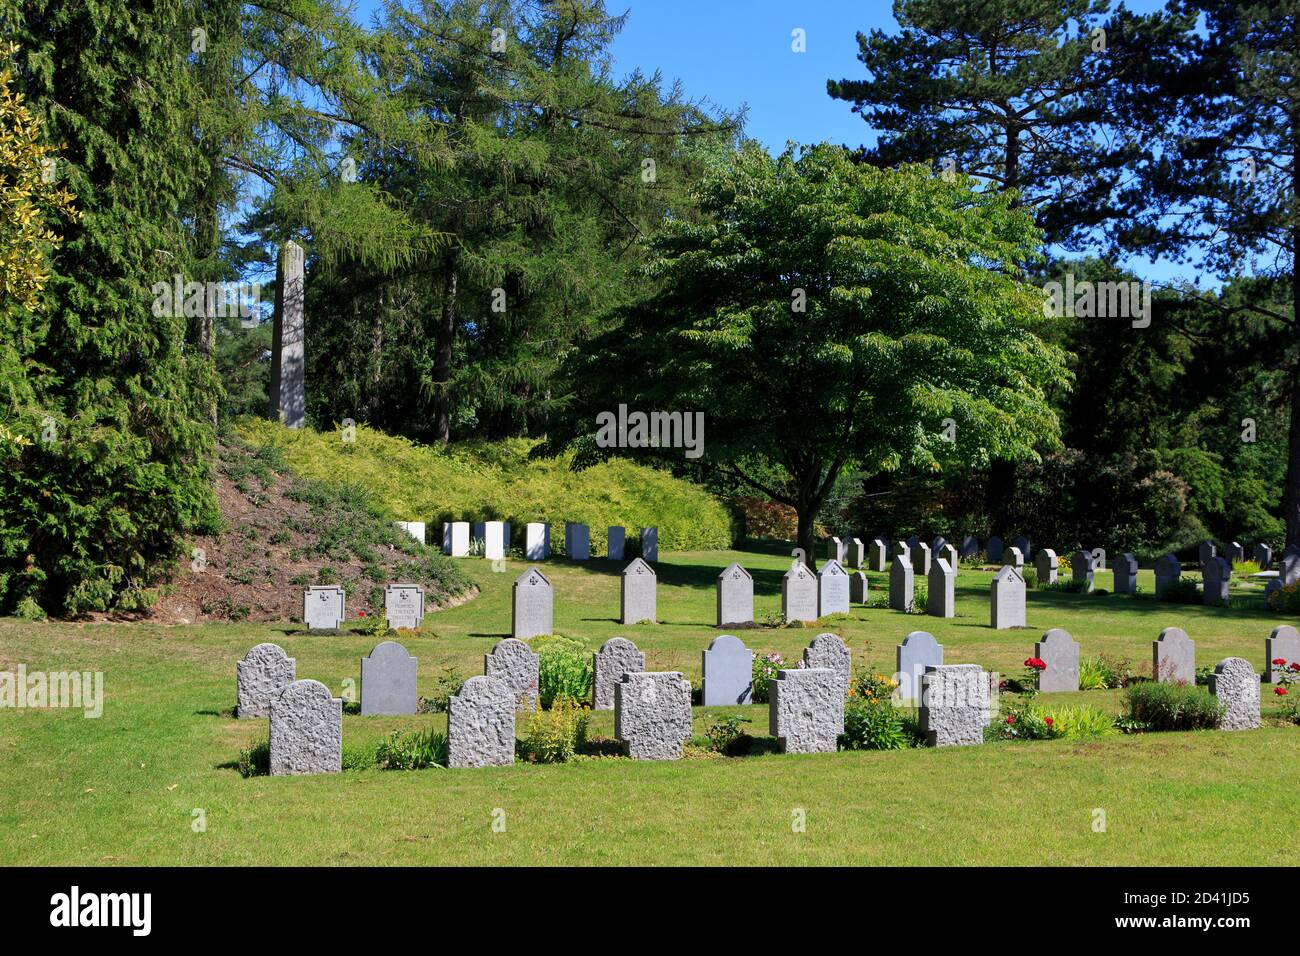 German World War I tombstones at St. Symphorien Military Cemetery in Mons, Belgium Stock Photo